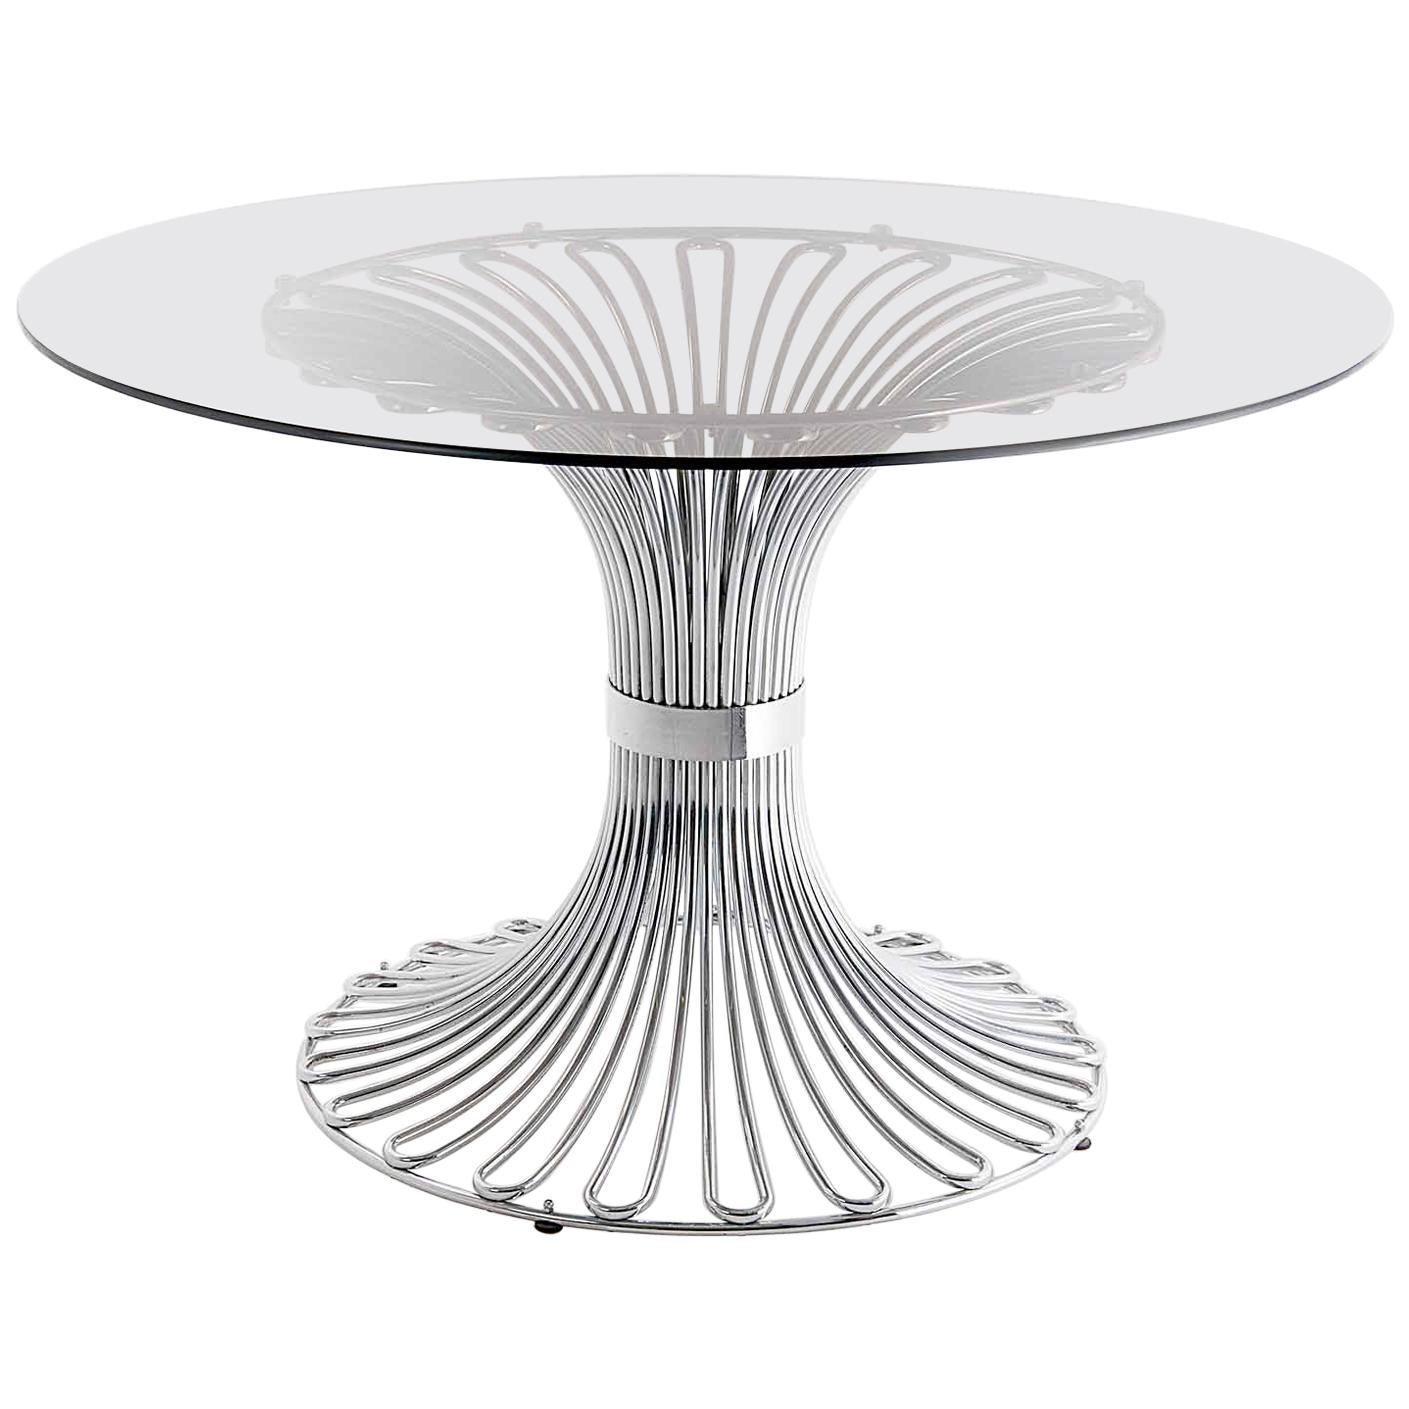 Gastone Rinaldi Circular Dinning Table, Chrome and Smoked Glass Top, Italy, 1965